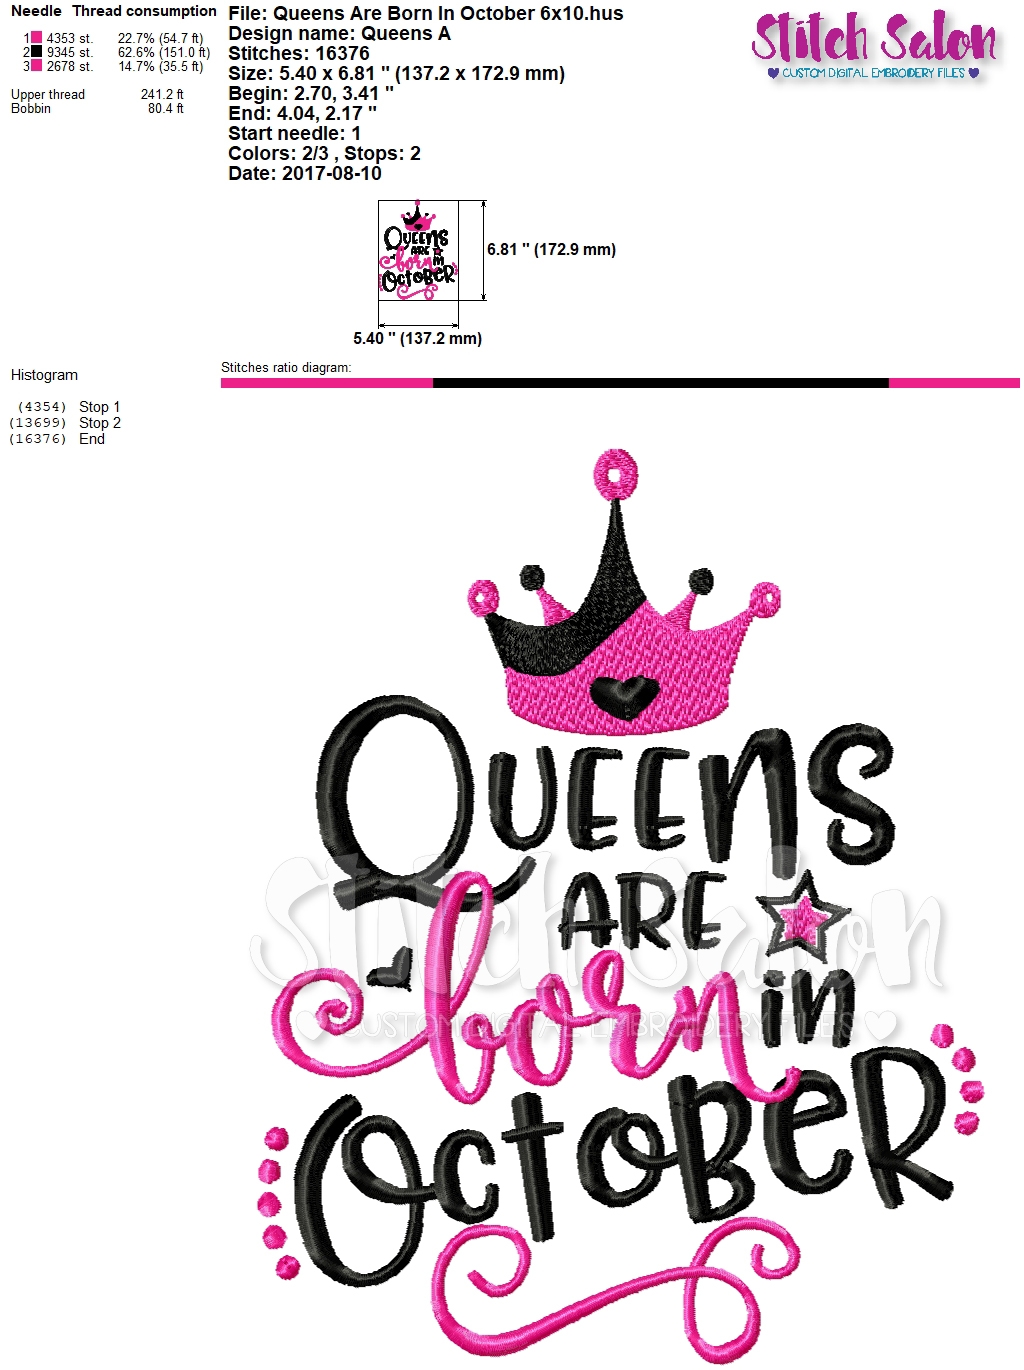 Queens Are Born In October Birthday Embroidery Design Files Stitch